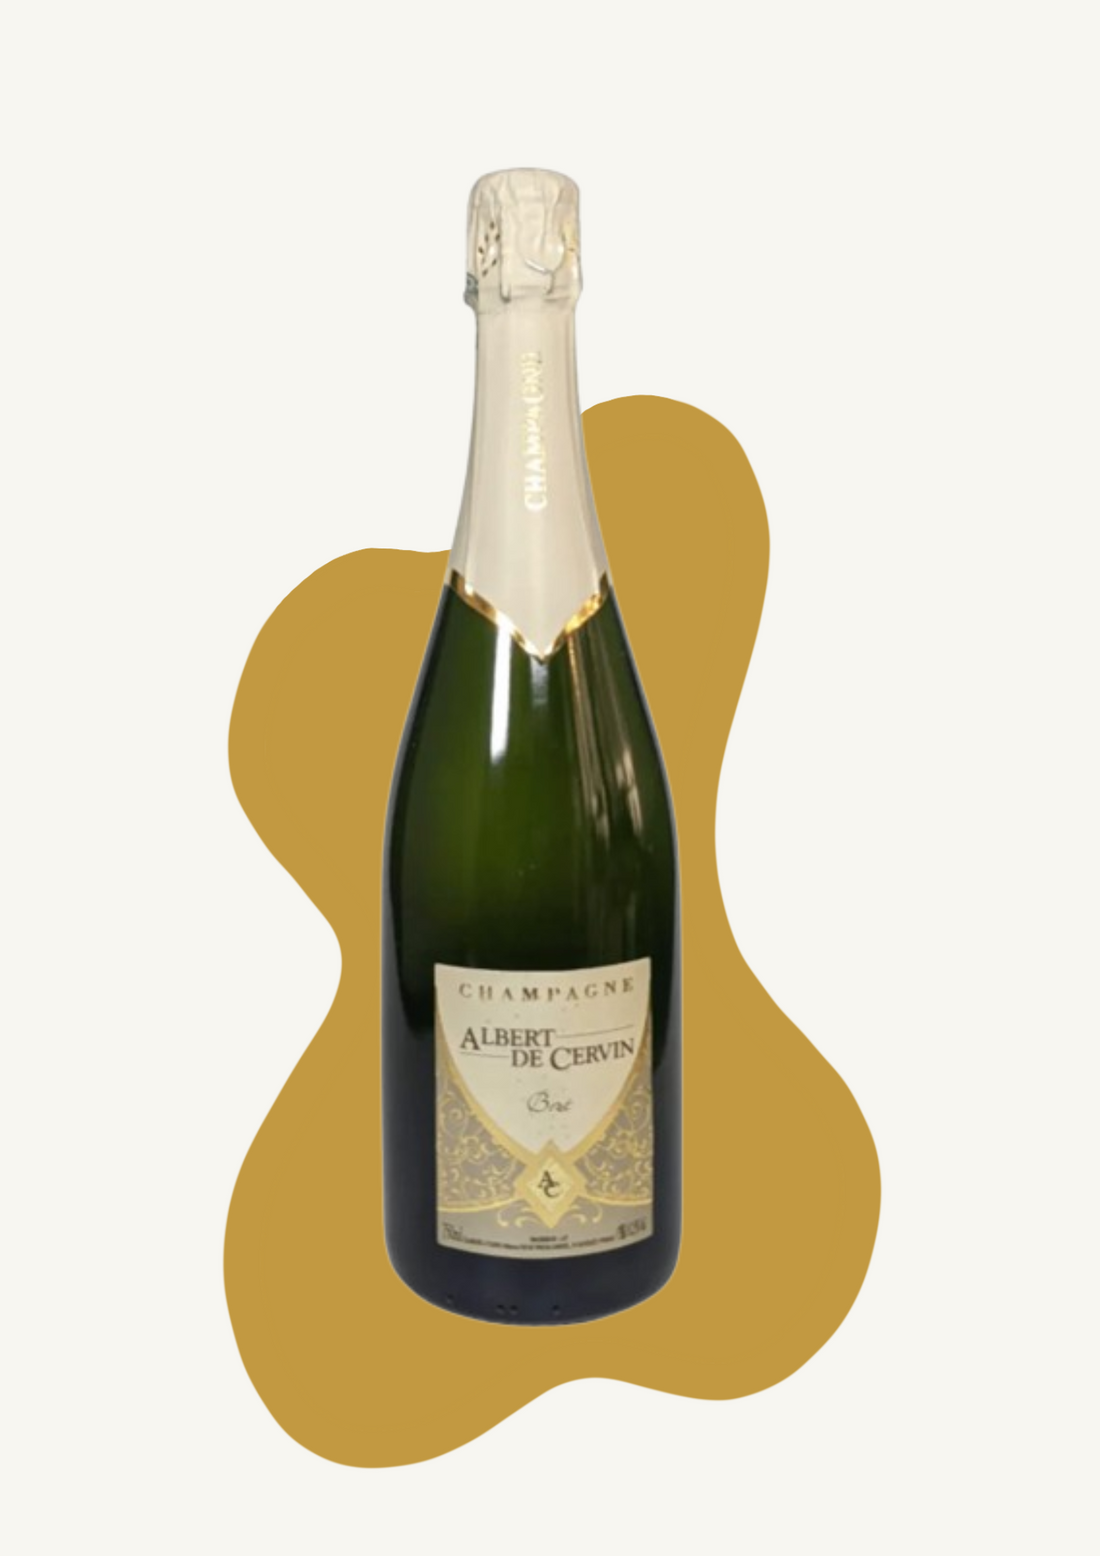 Champagne brut - Albert de Cervin